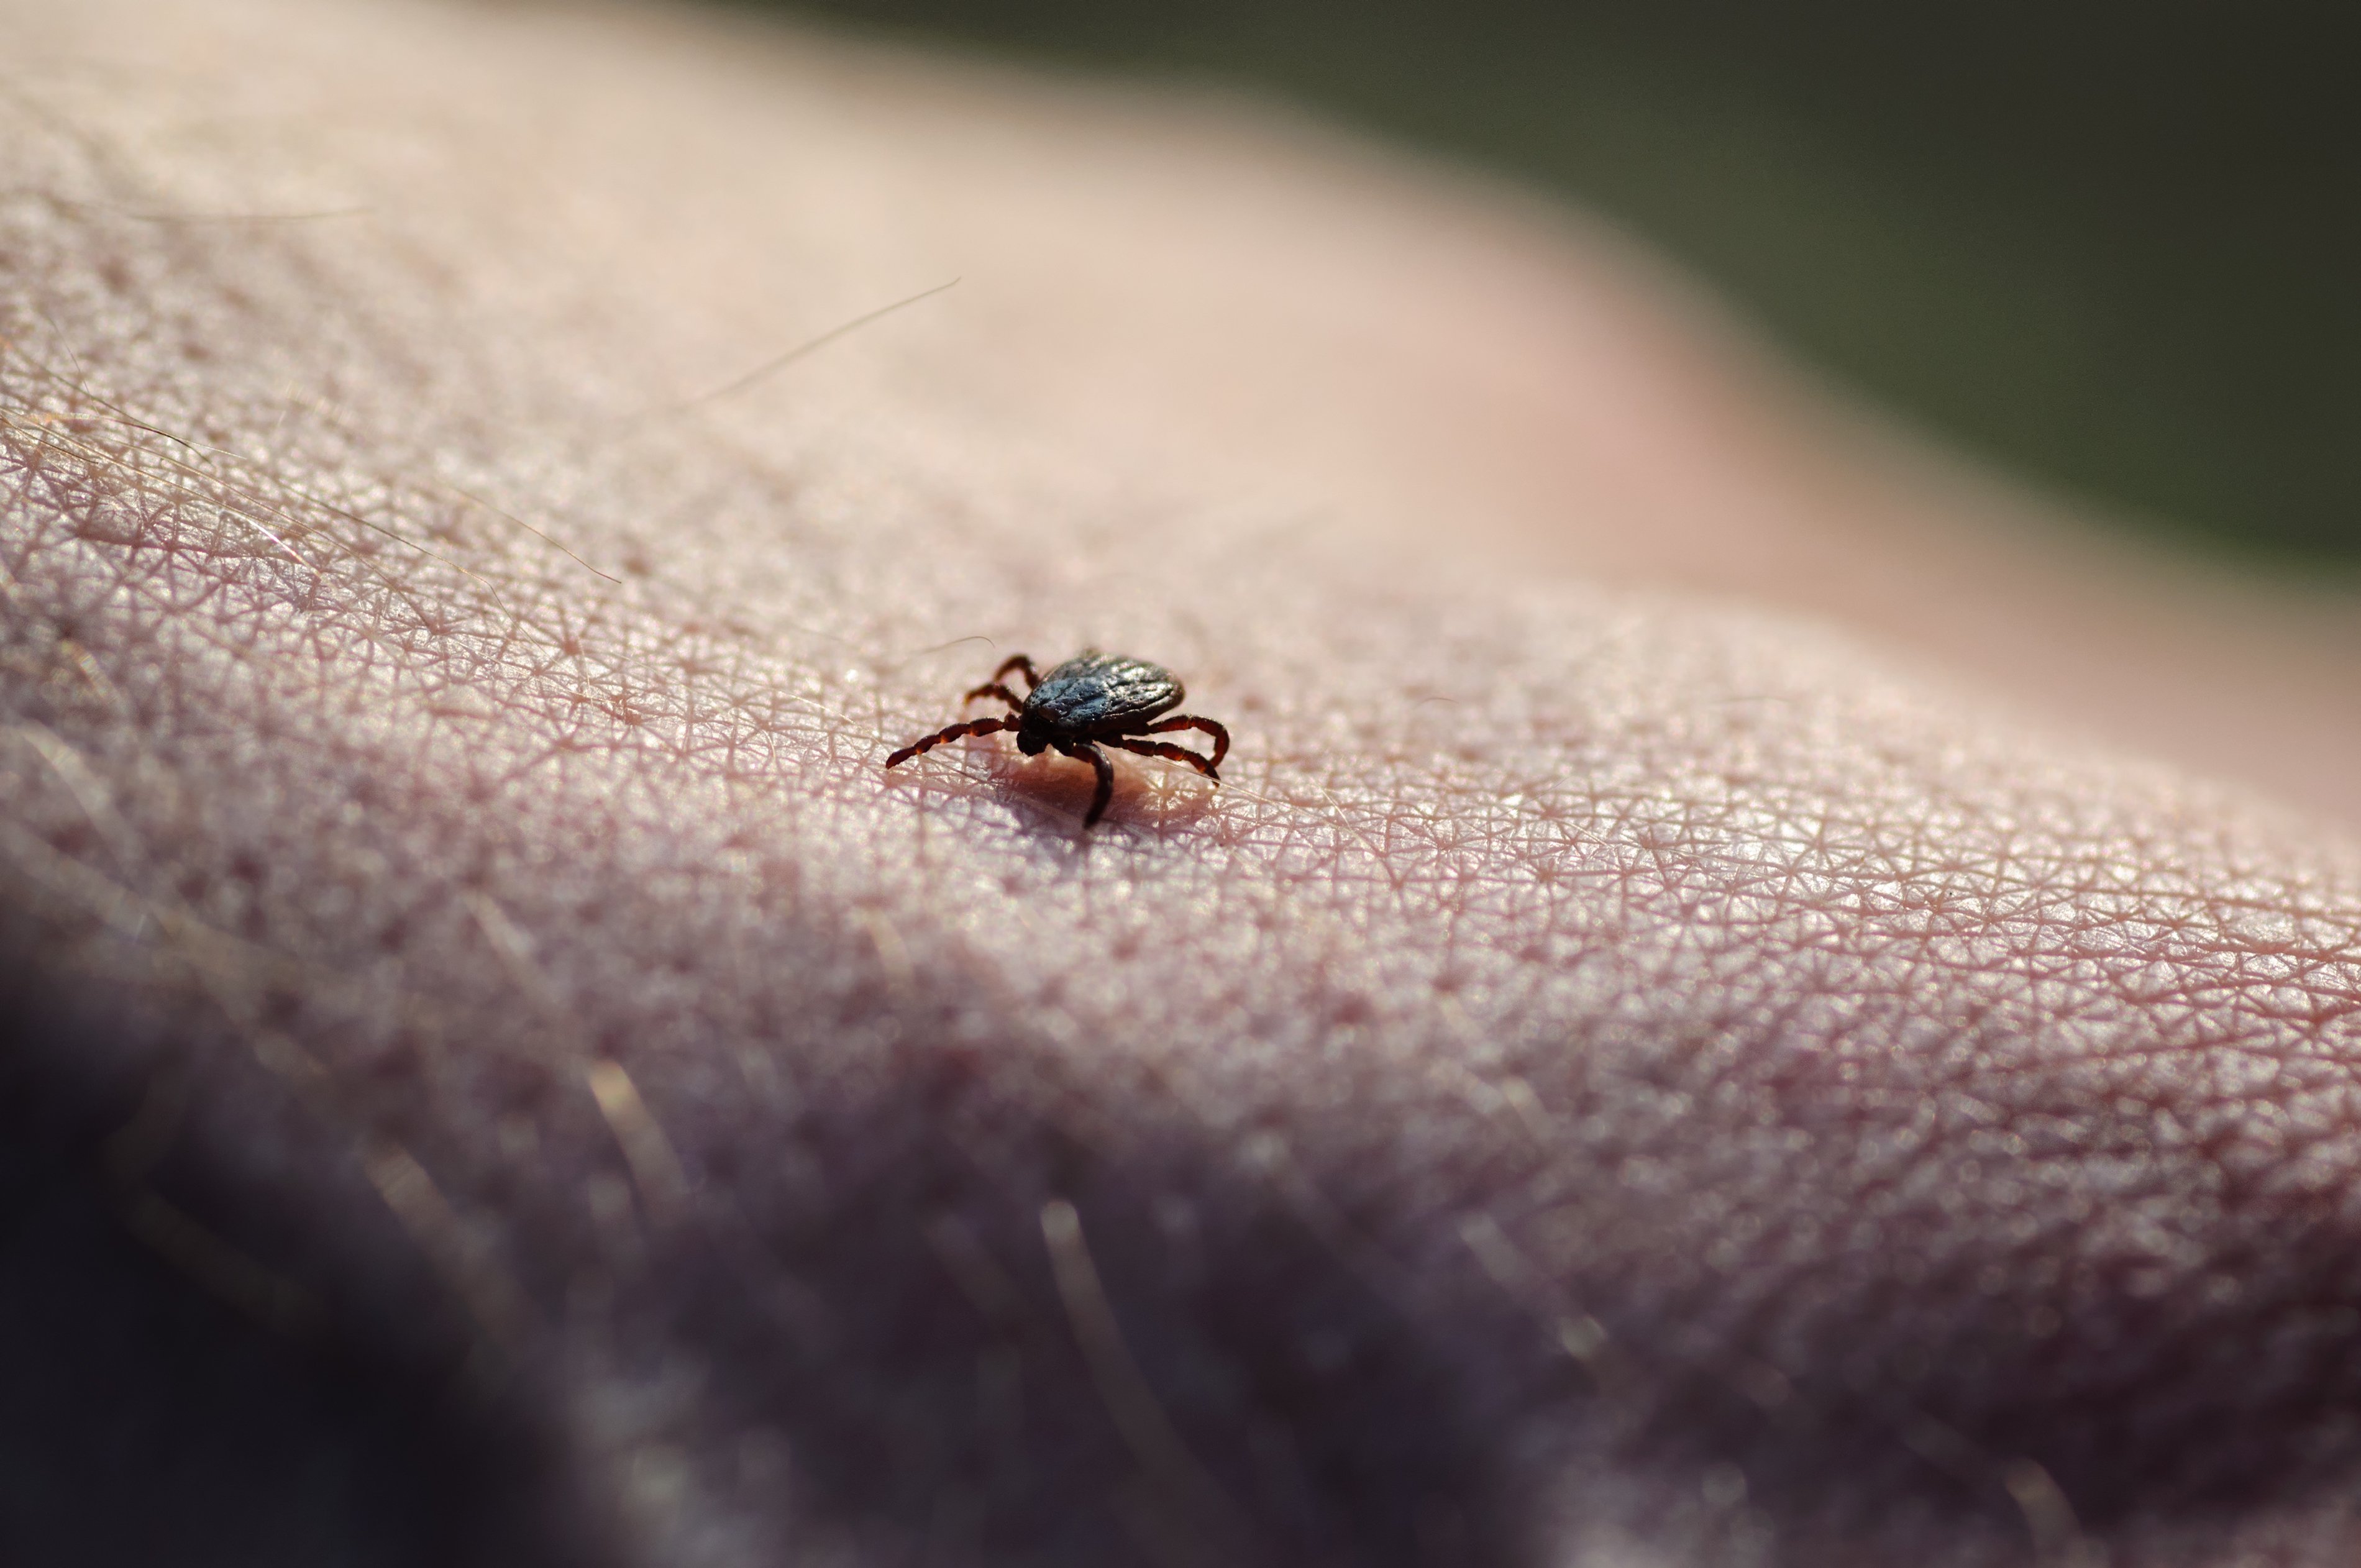 mosquito.buzz tick control will help get rid of ticks in Ottawa.